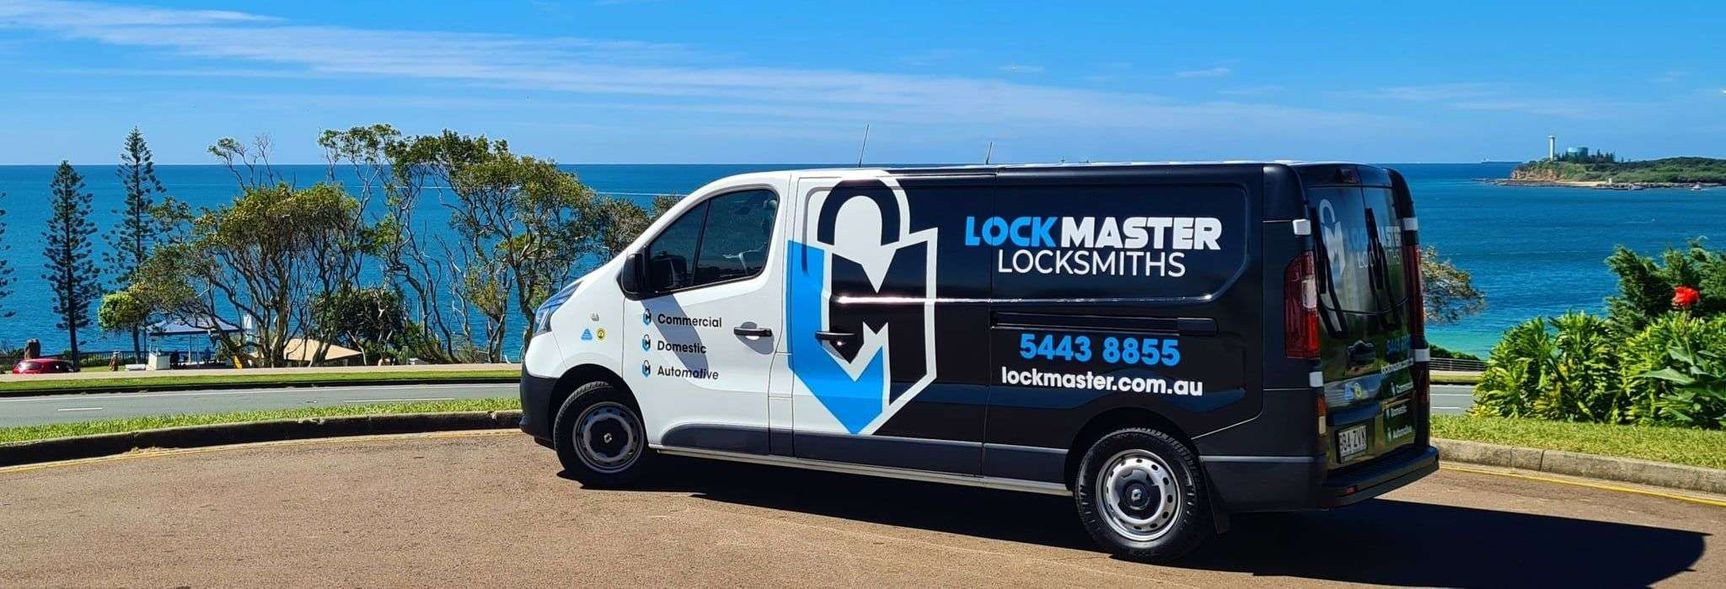 Lockmaster Locksmiths gallery image 1